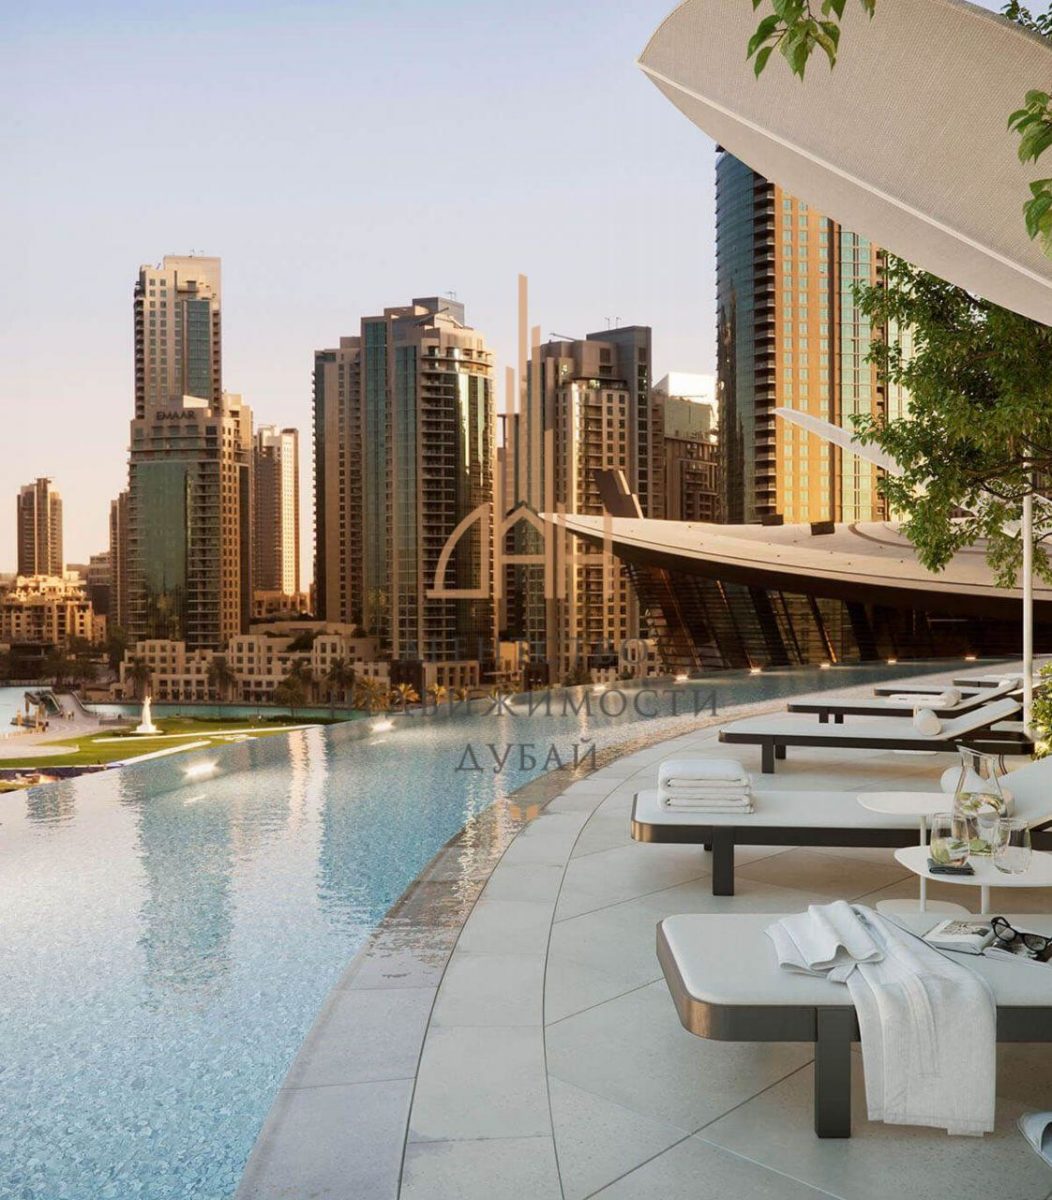 (RU) FGB, 3 Abu Dhabi realty majors запускают СП по недвижимости стоимостью $ 500 млн